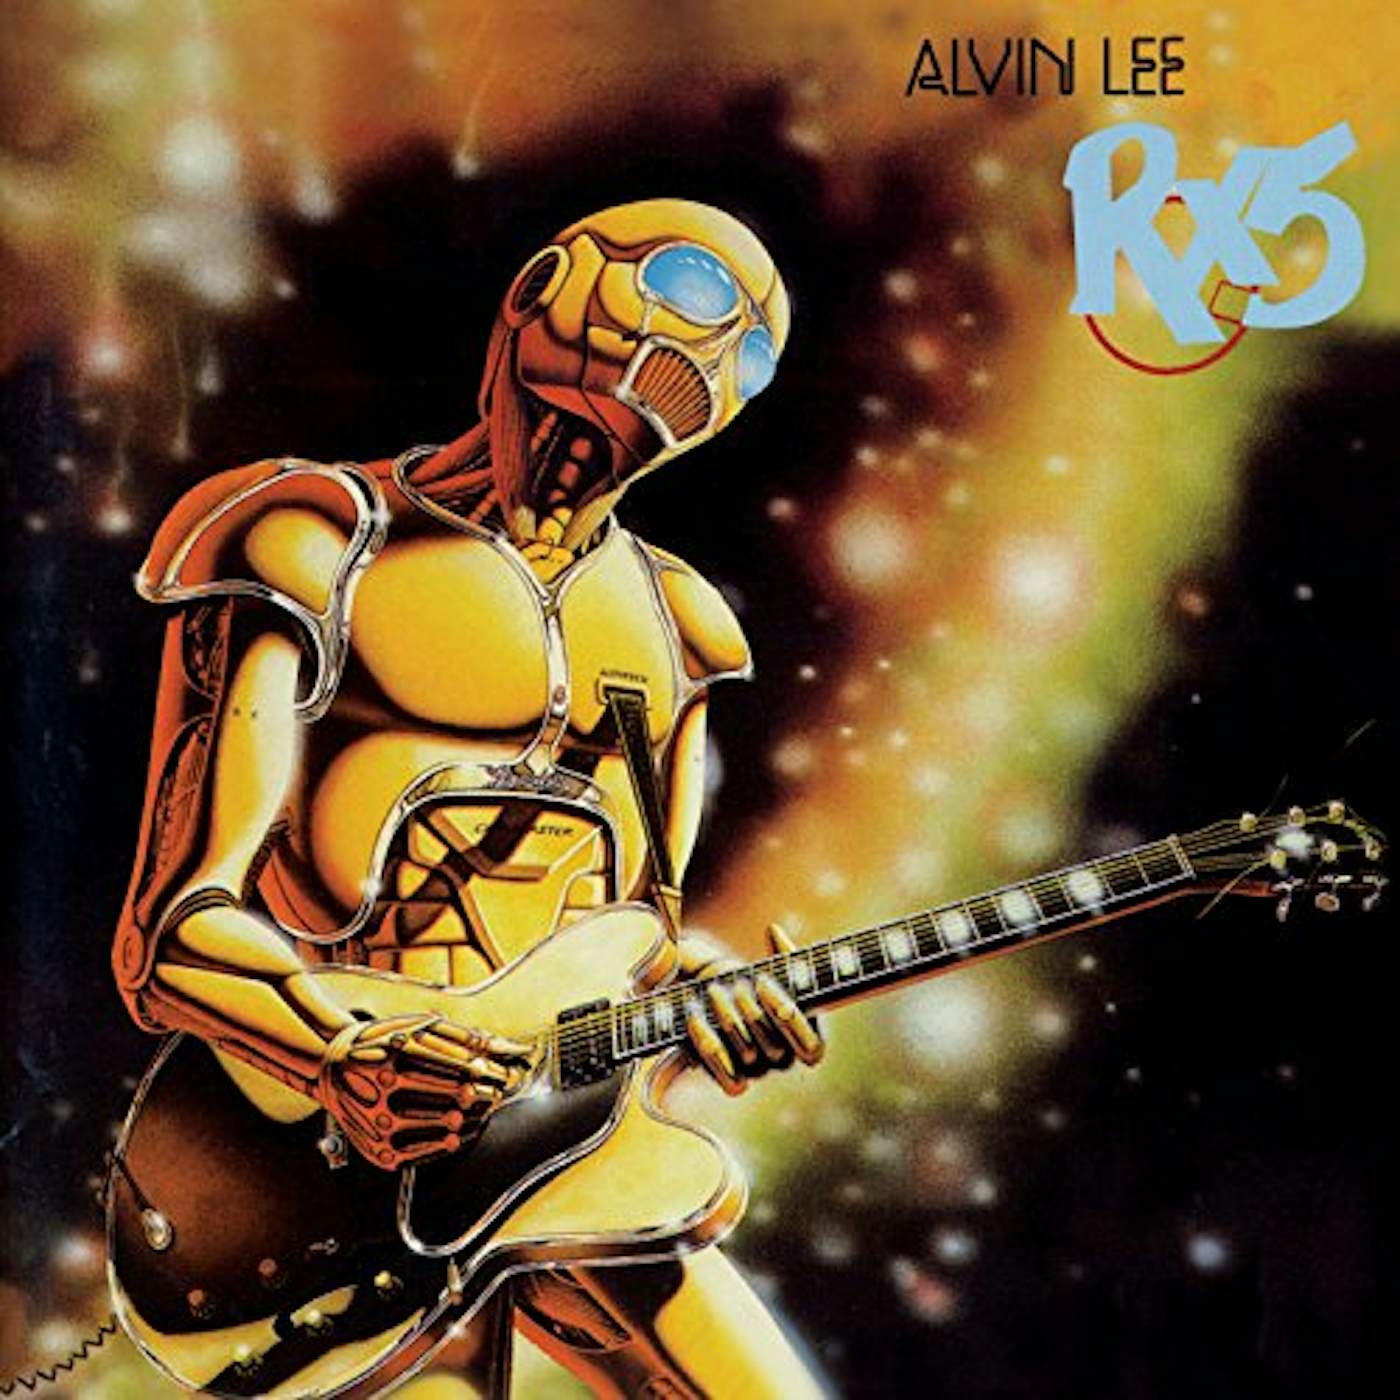 Alvin Lee RX5 CD